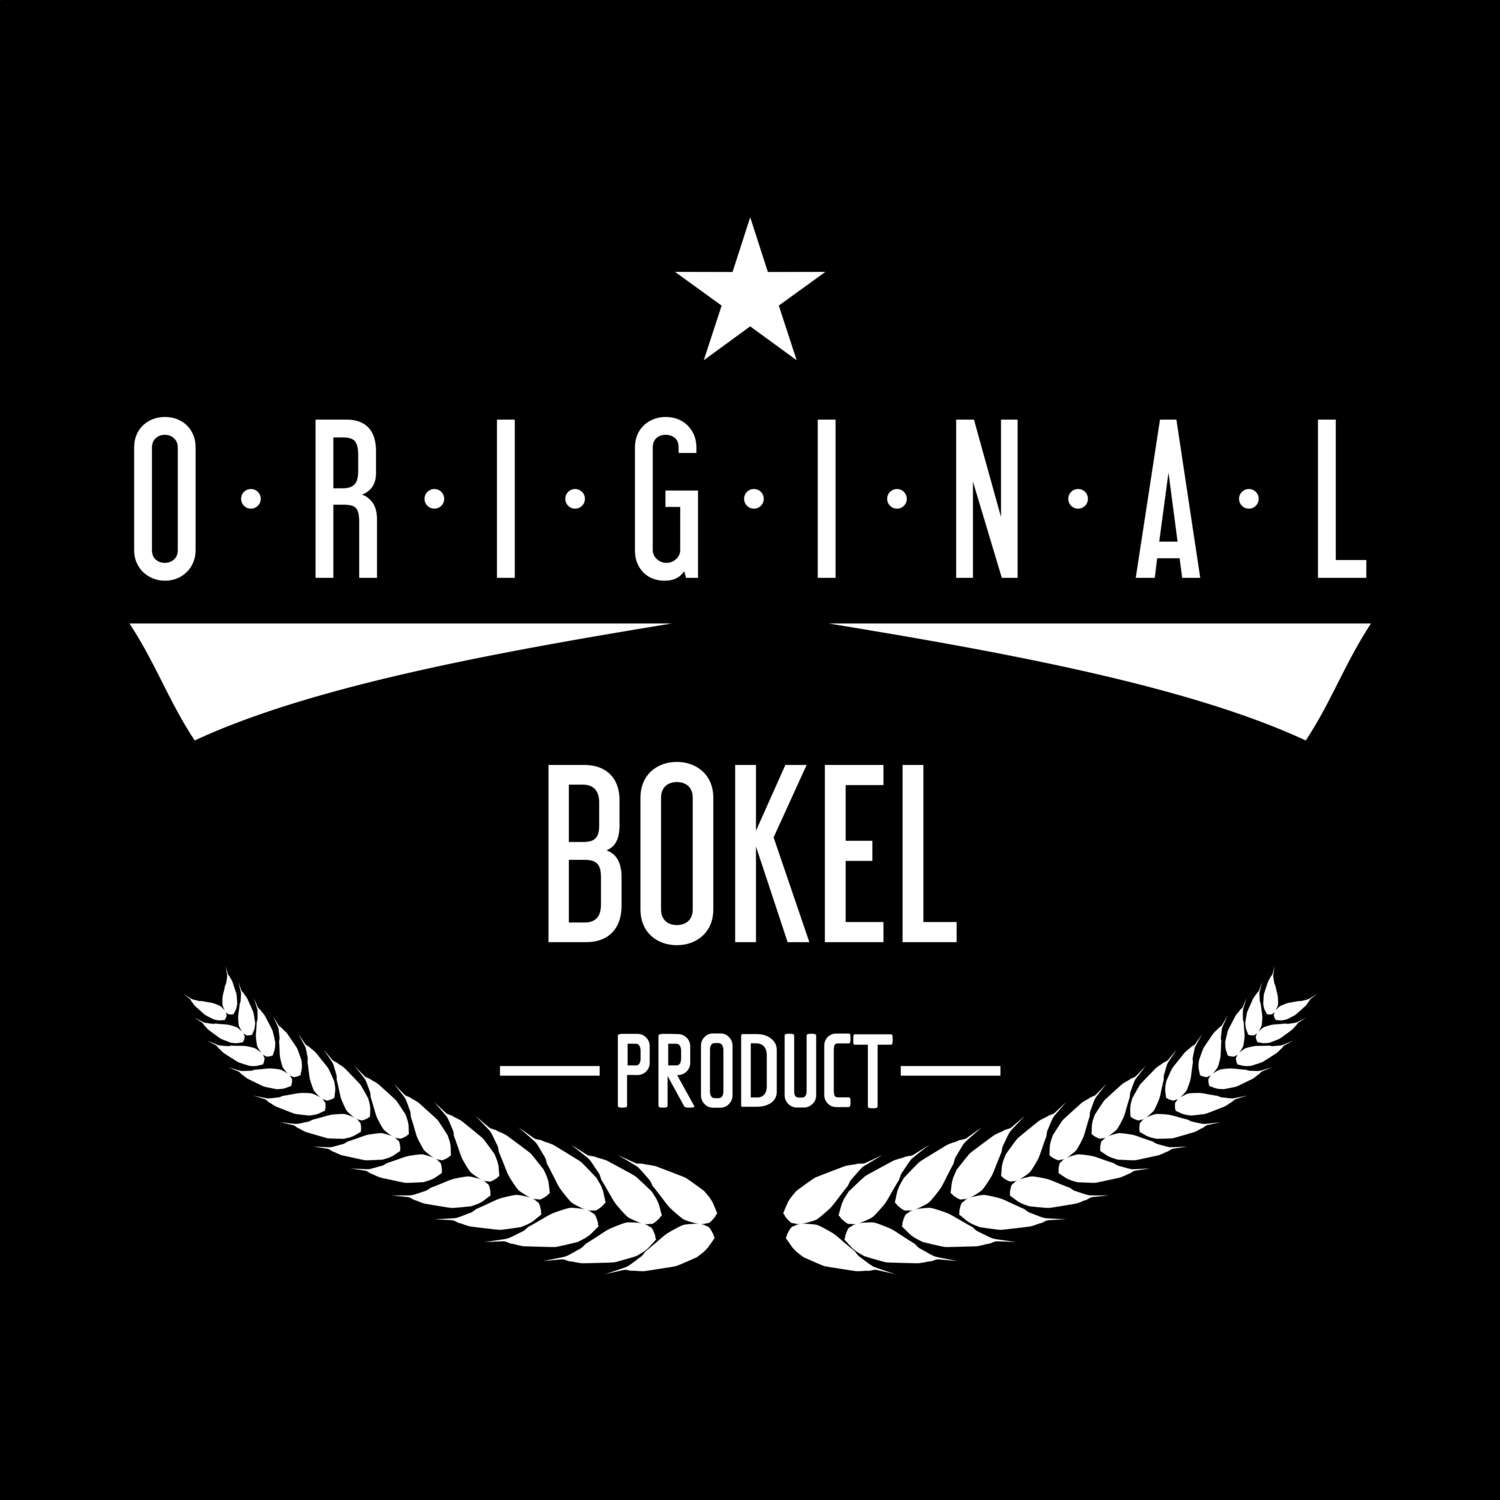 Bokel T-Shirt »Original Product«